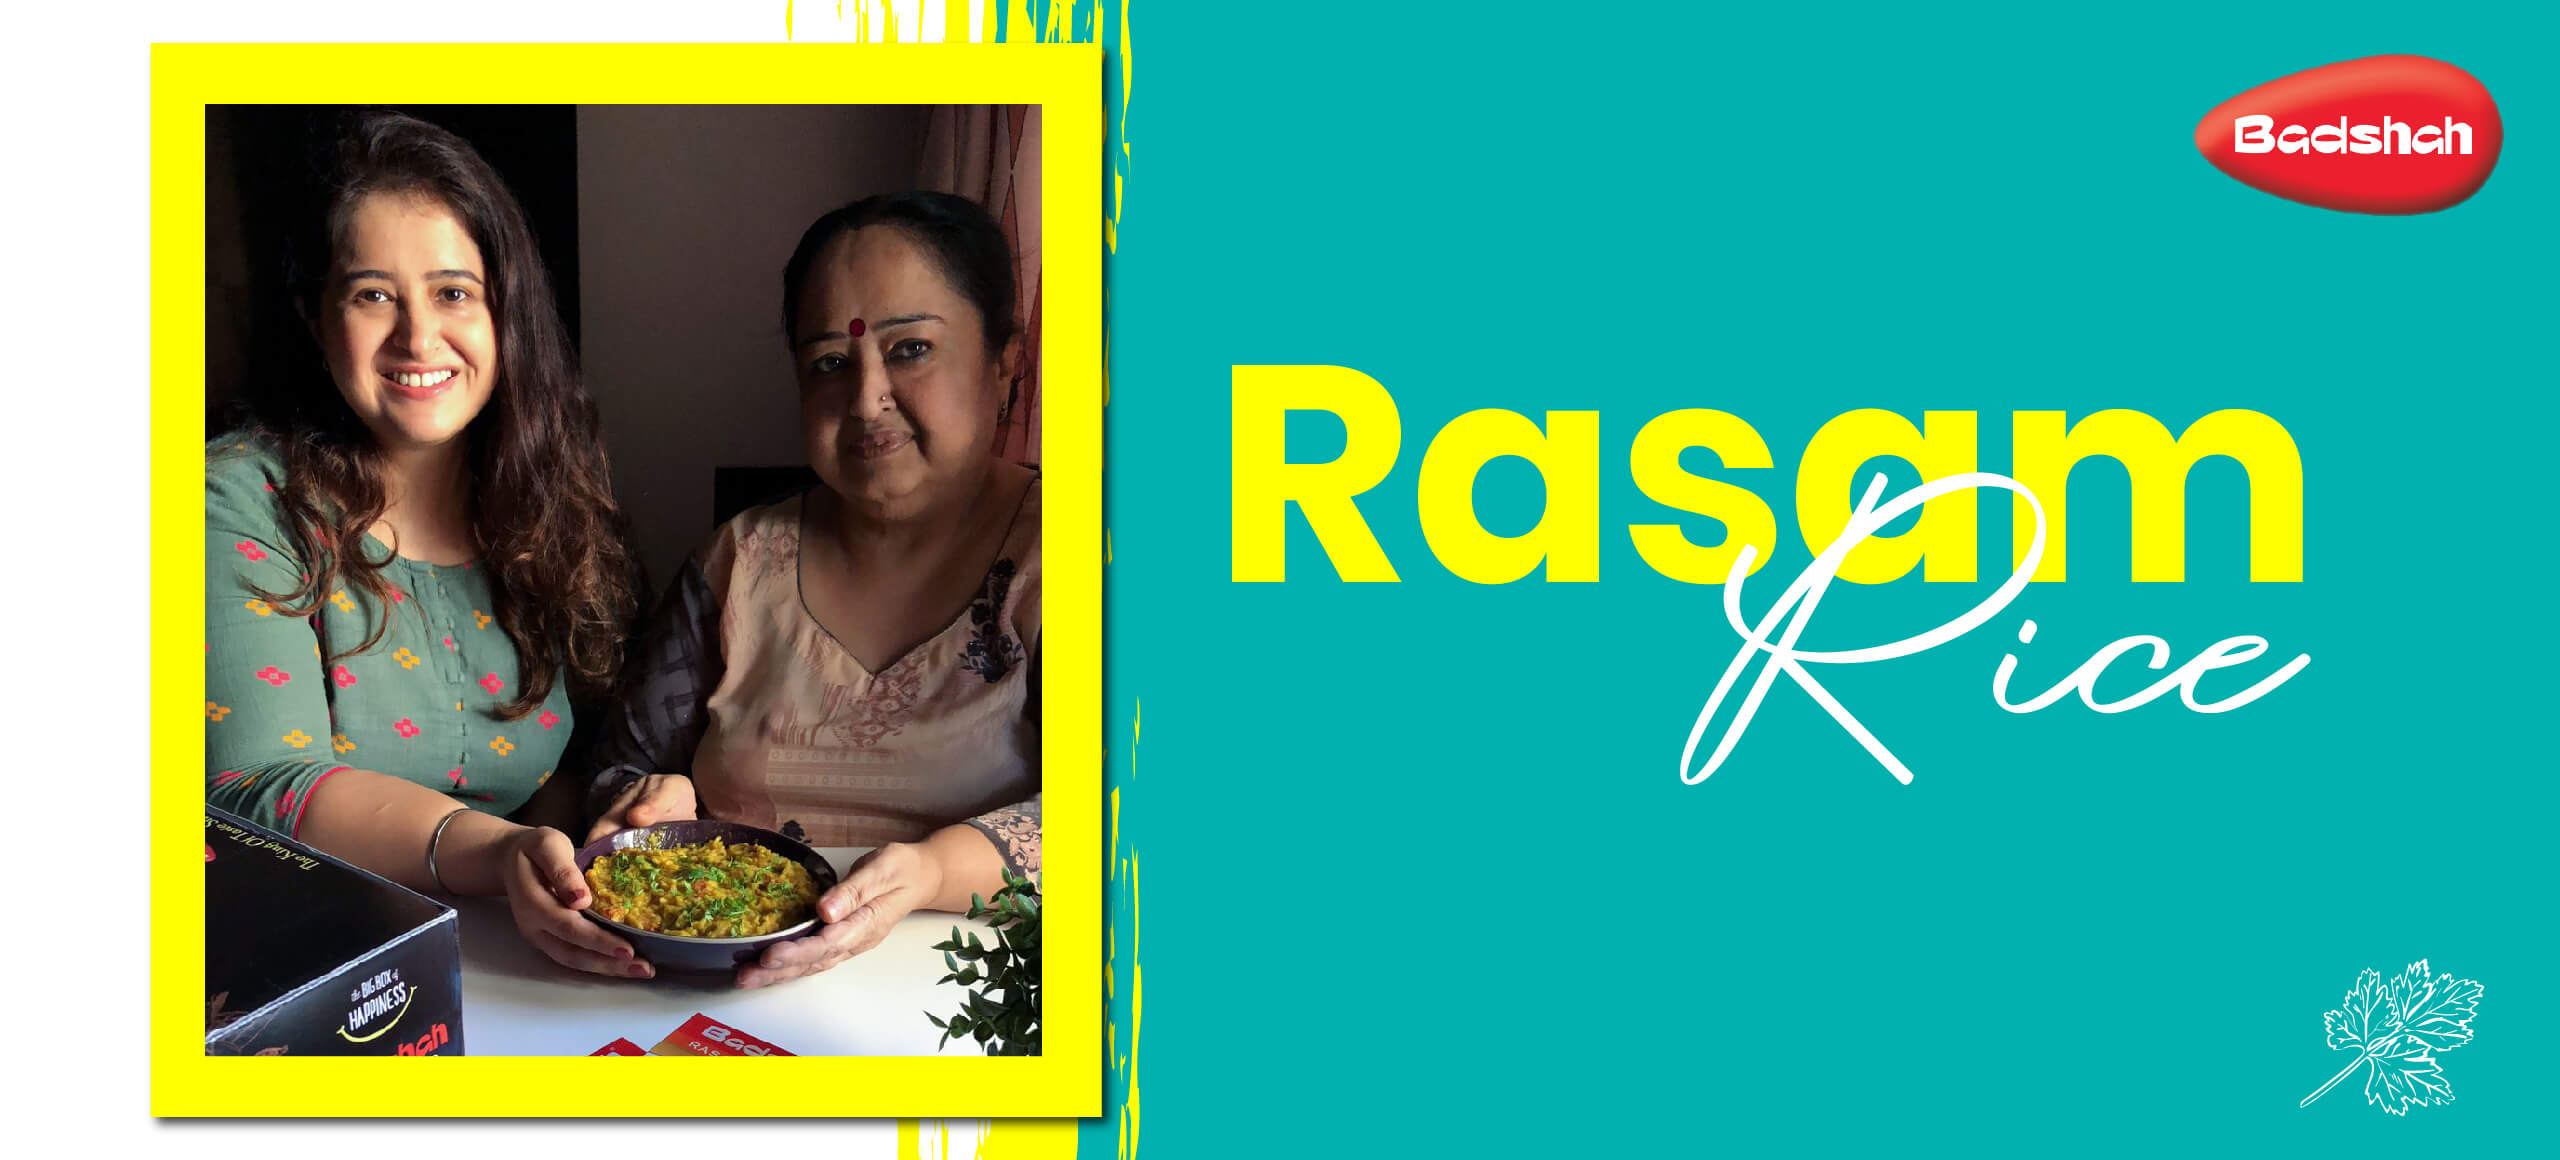 Rasam Rice Recipe